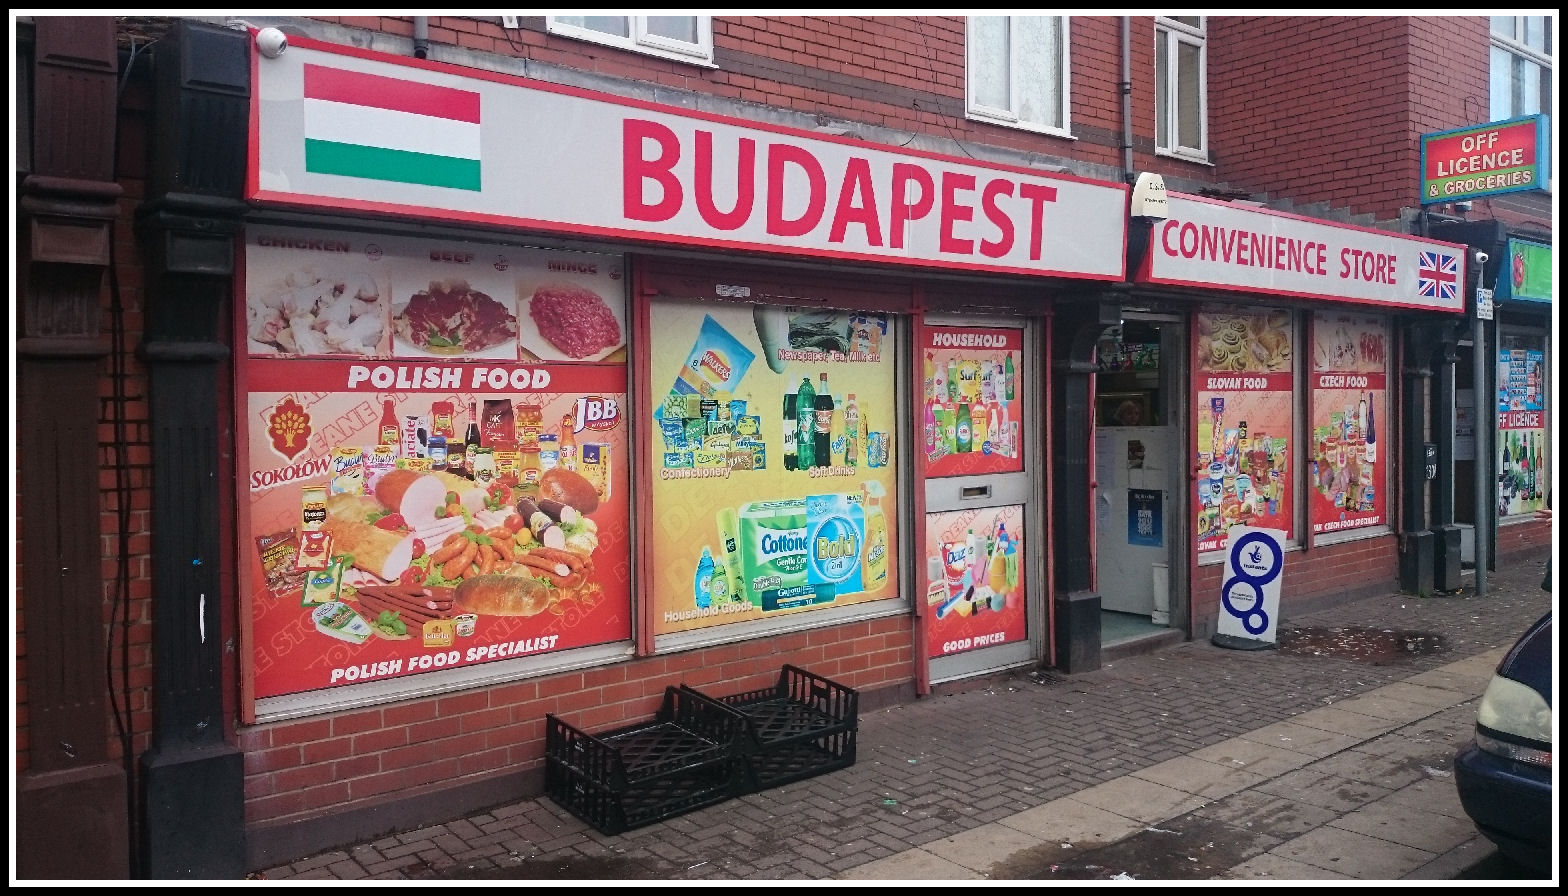 Budapest Convenience Store, Bolton - Tel: 01204 372009